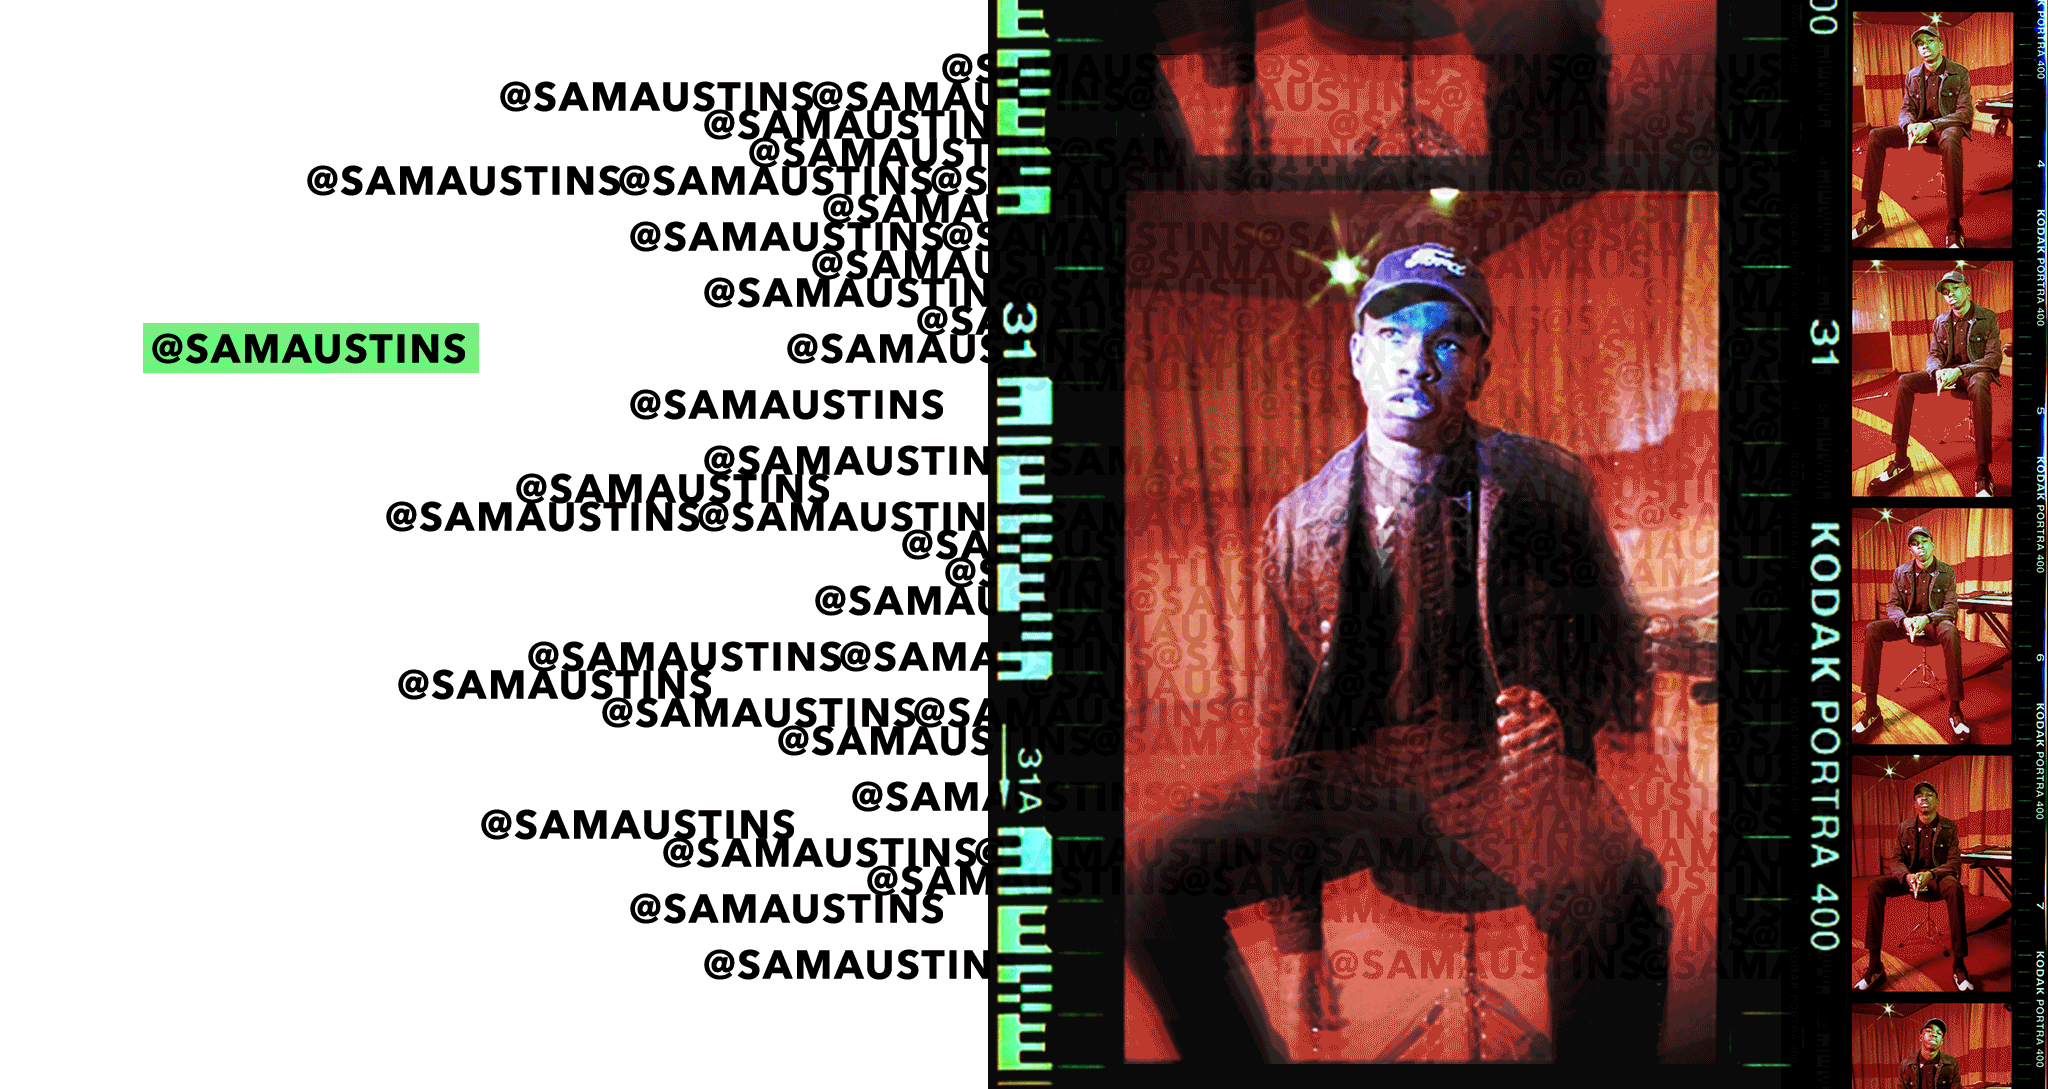 animation & Sam Austins instagram handle